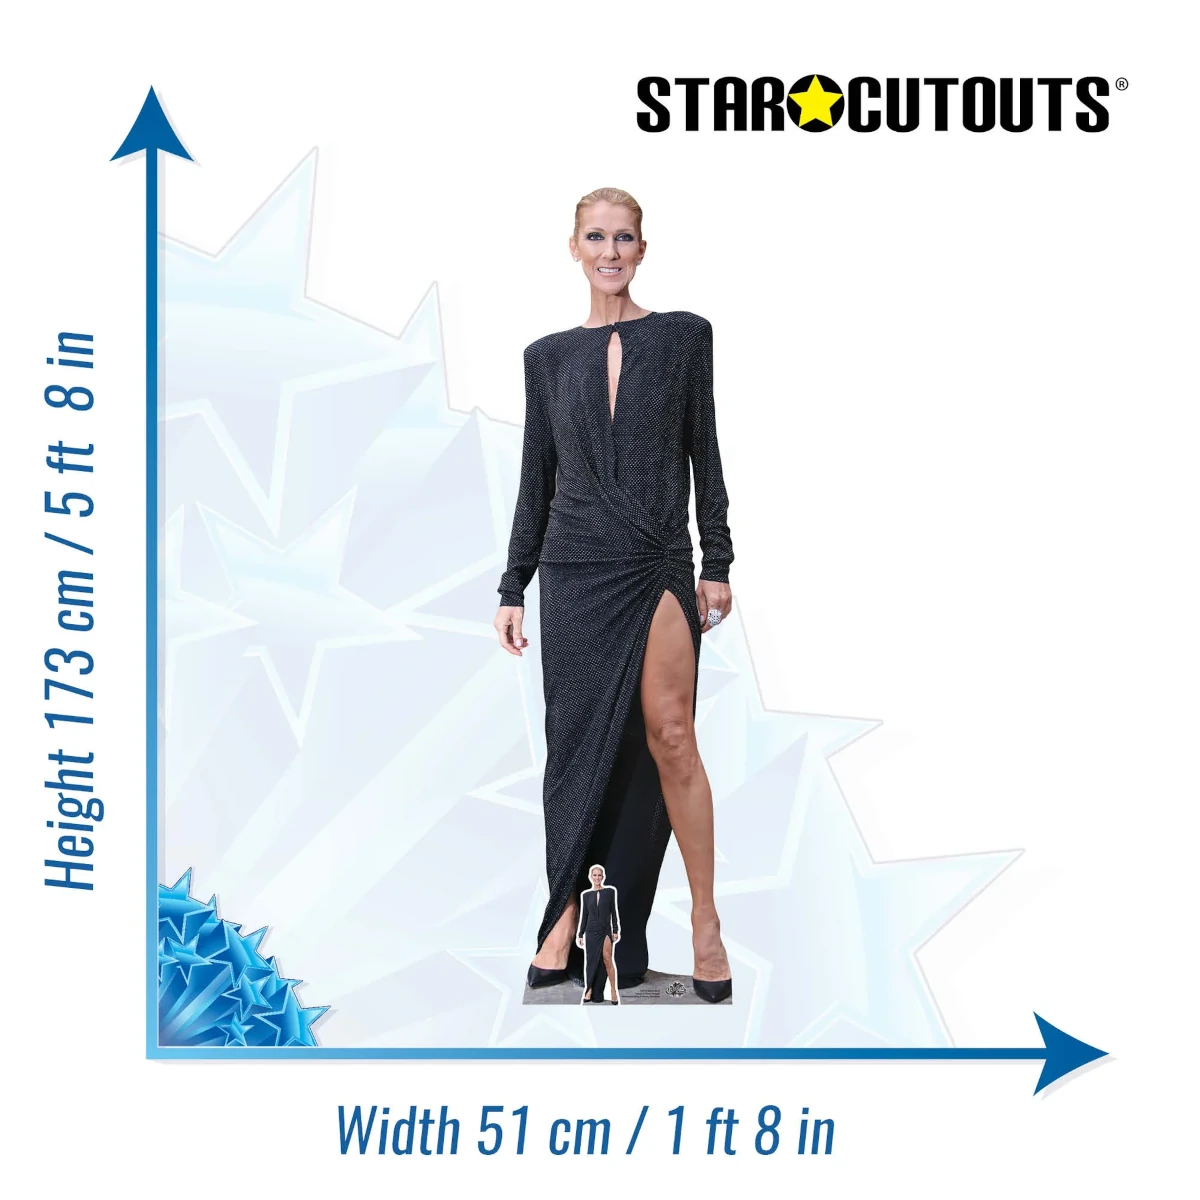 CS812 Celine Dion 'Black Dress' (Canadian Singer) Lifesize + Mini Cardboard Cutout Standee Size